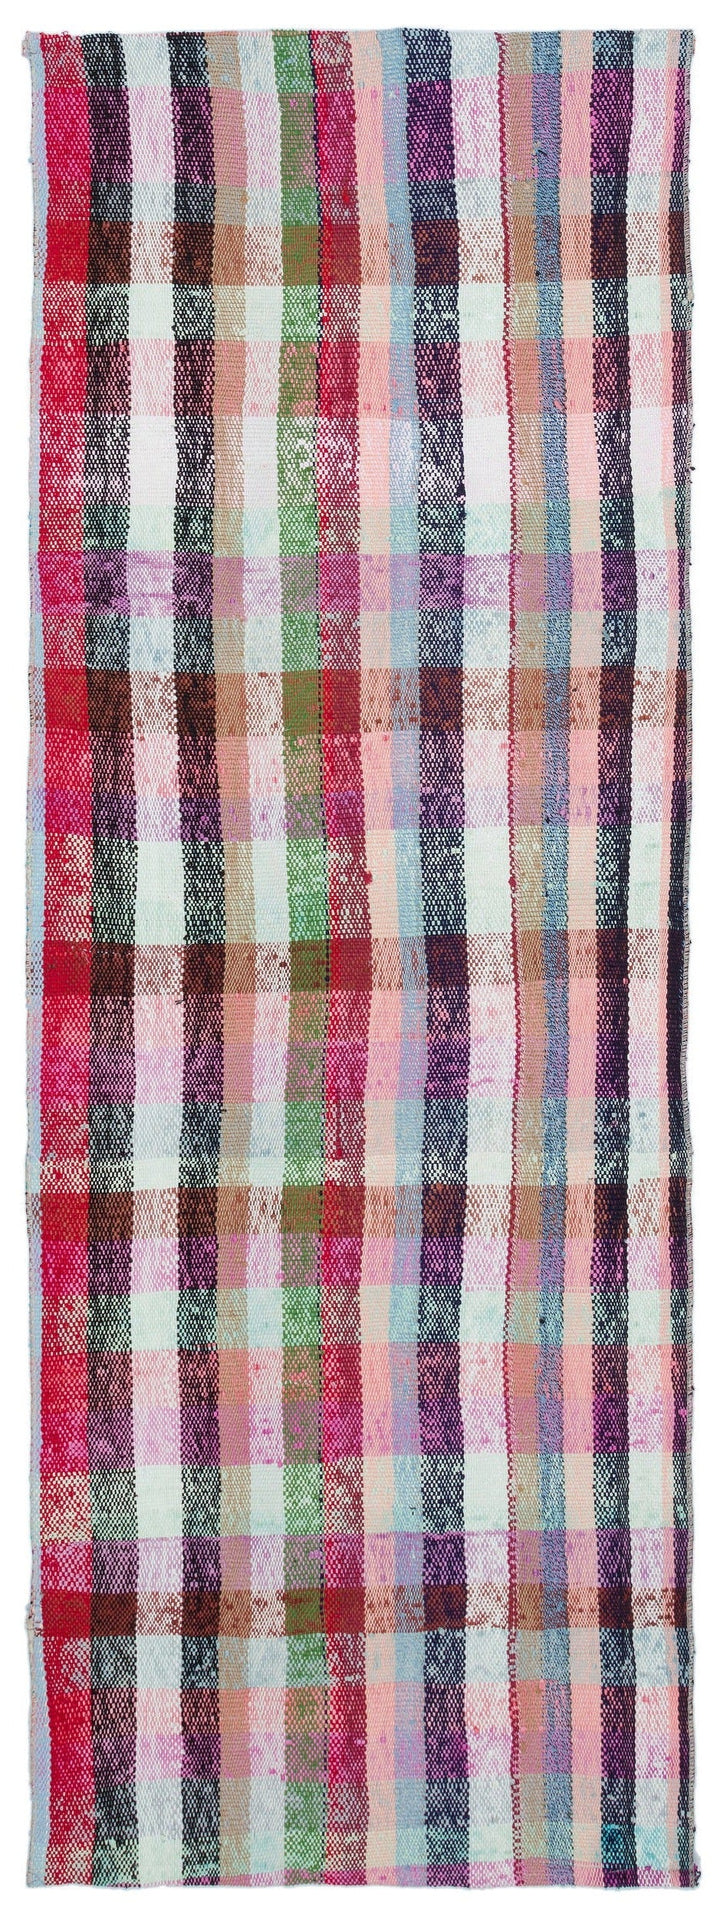 Cretan Beige Striped Wool Hand-Woven Carpet 084 x 228